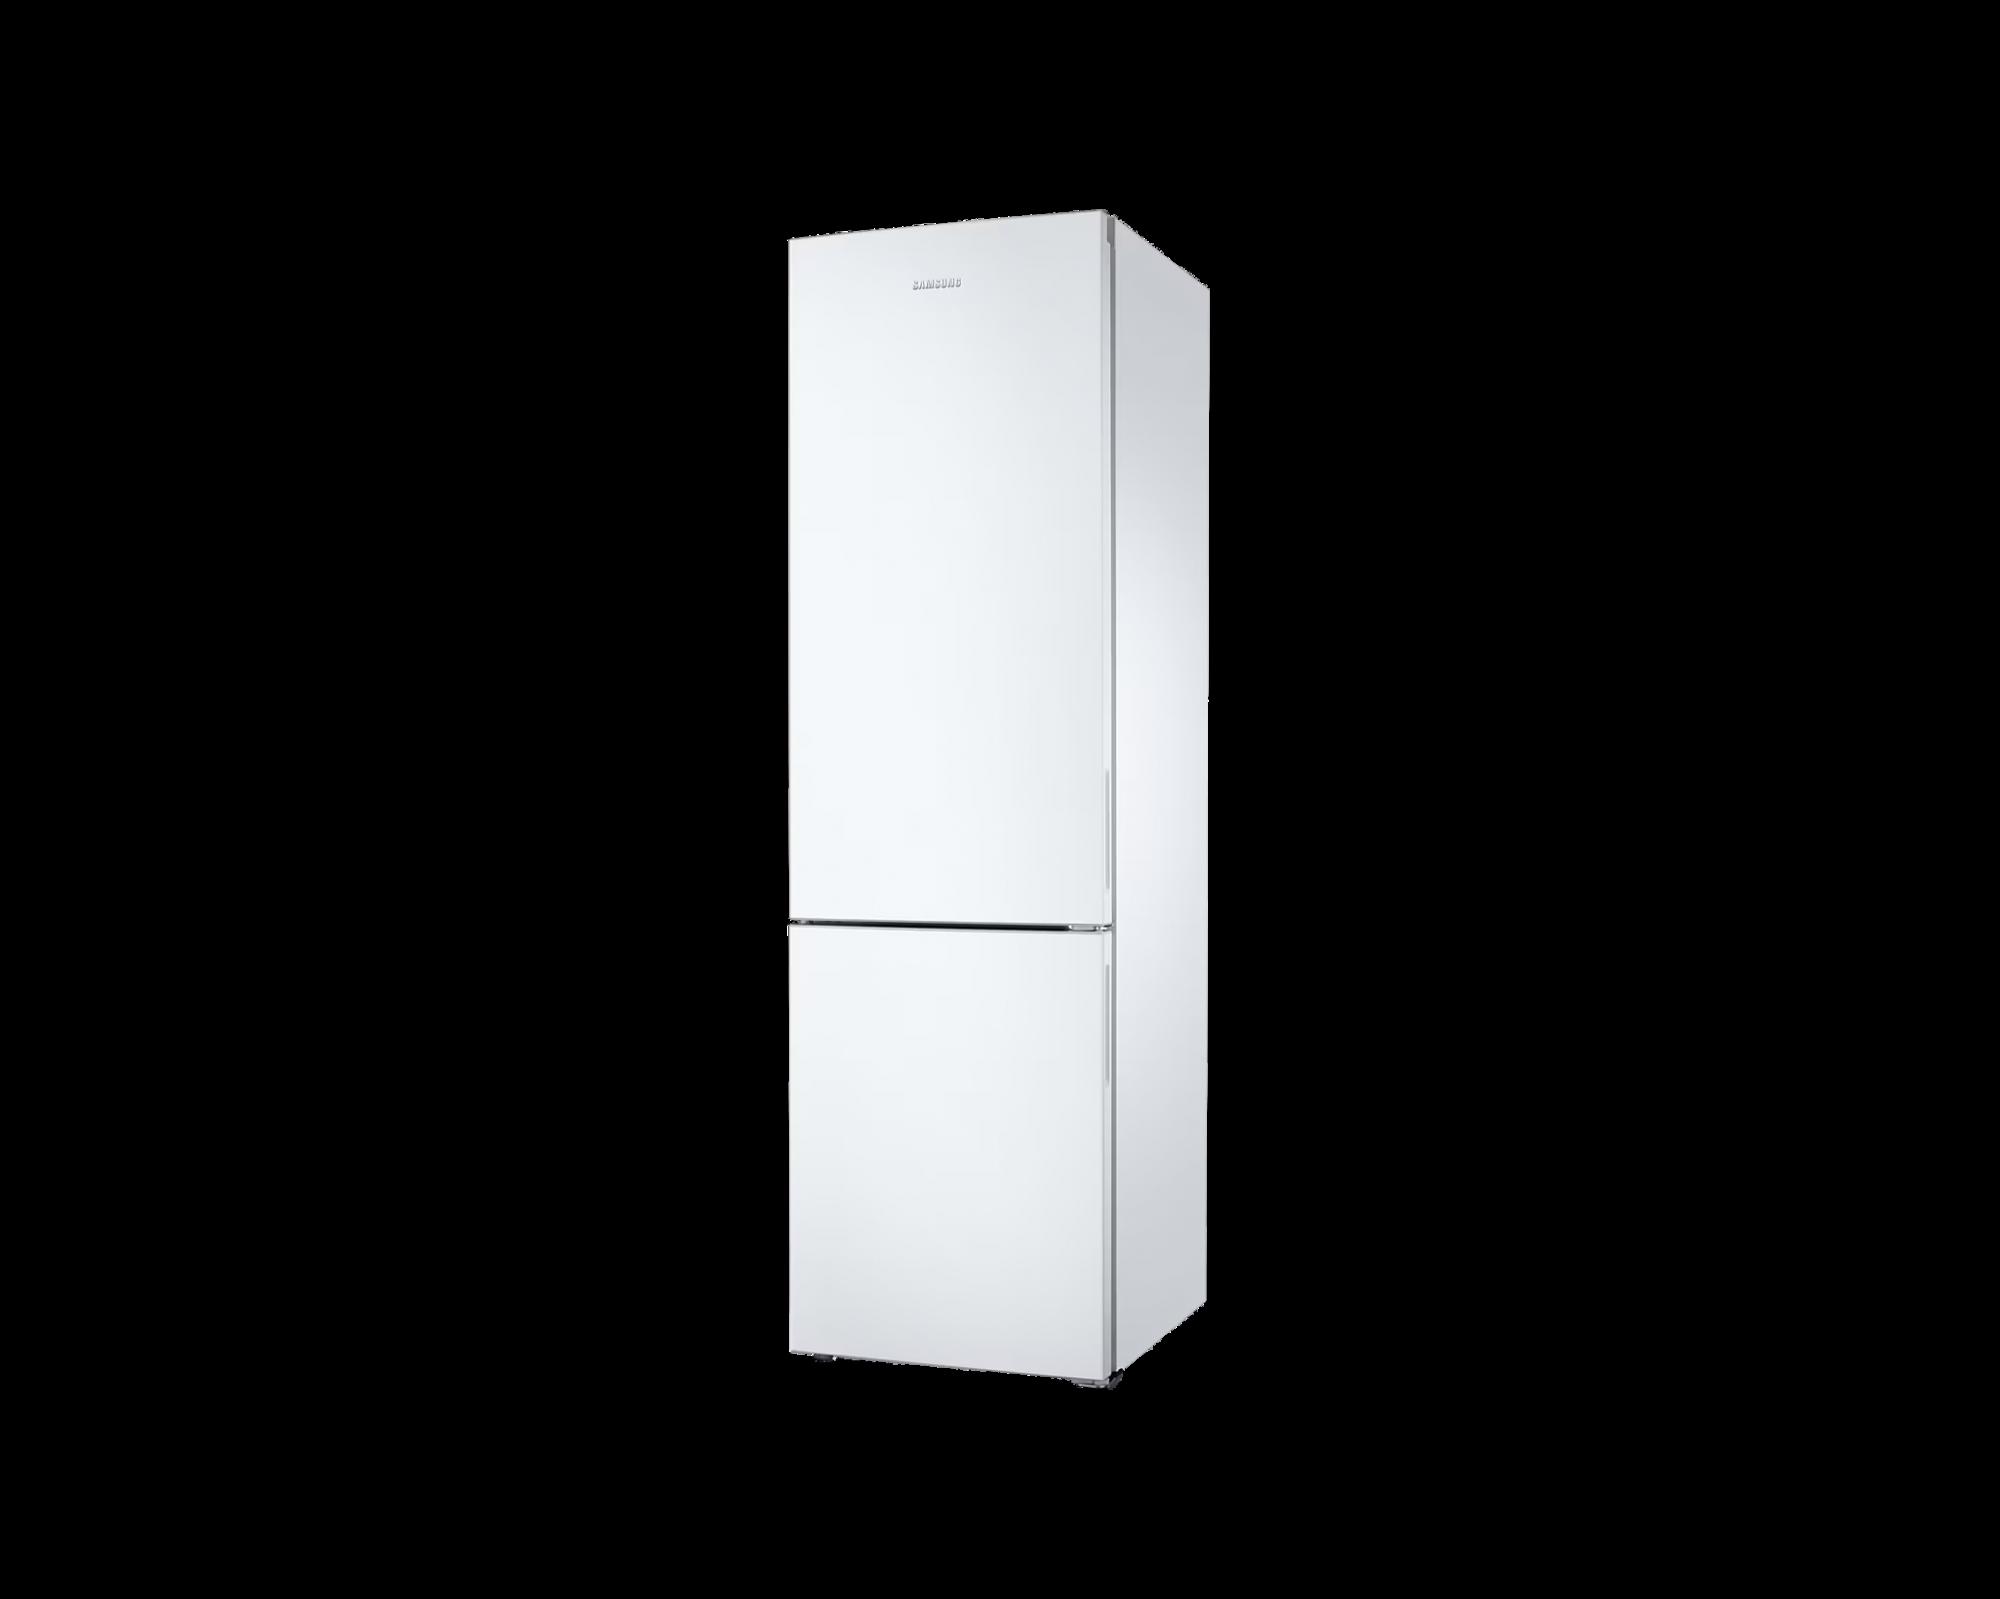 Холодильник Samsung RB37A5000WW белый